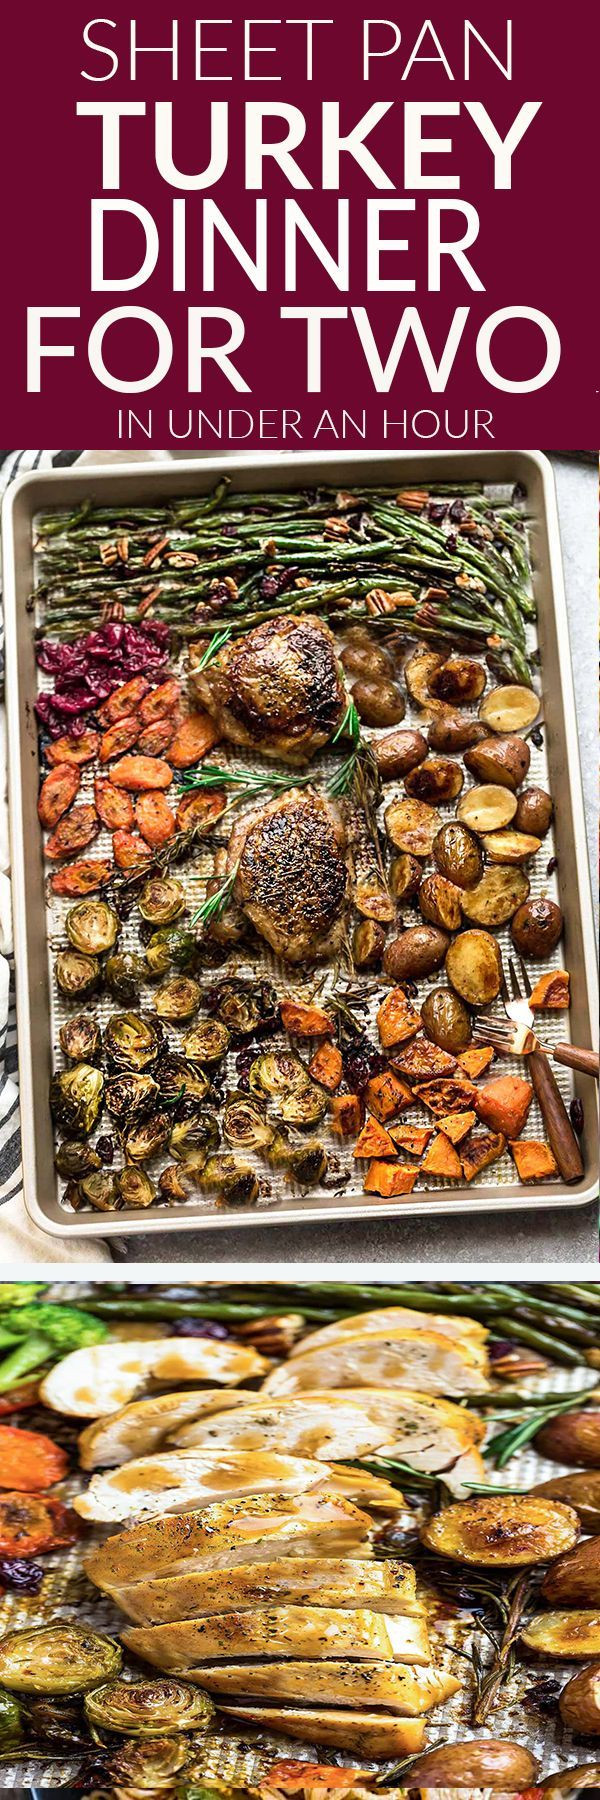 Thanksgiving Turkey For Two
 Best 25 Dinner for two ideas on Pinterest